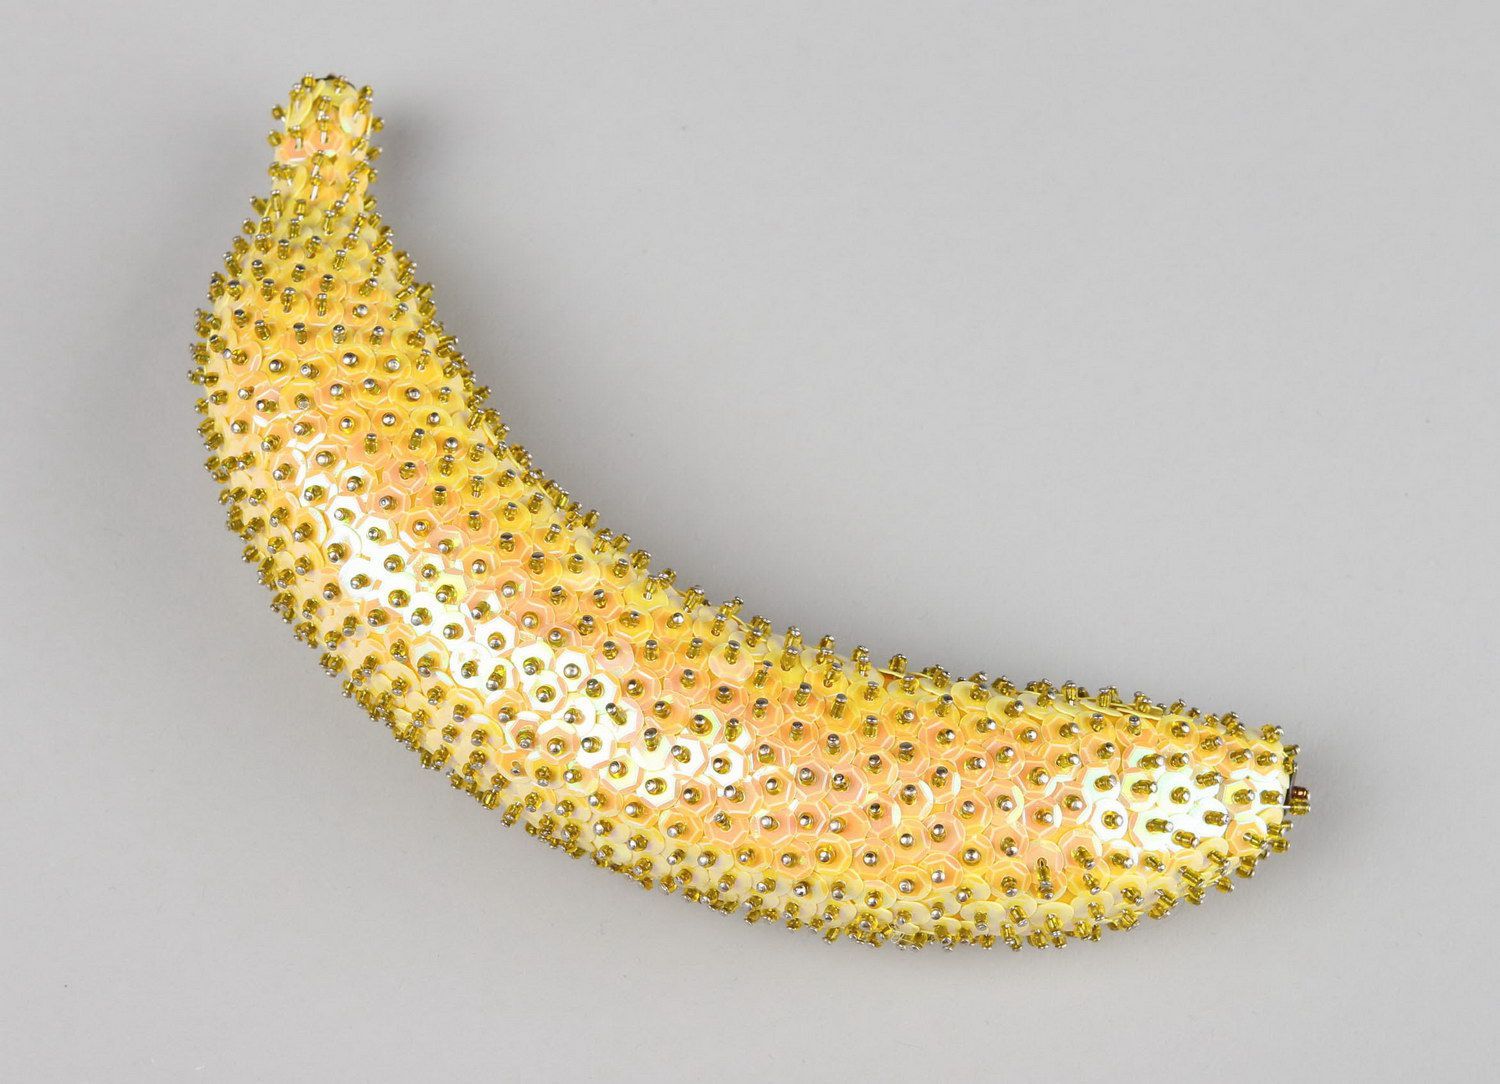 Decorative banana photo 1